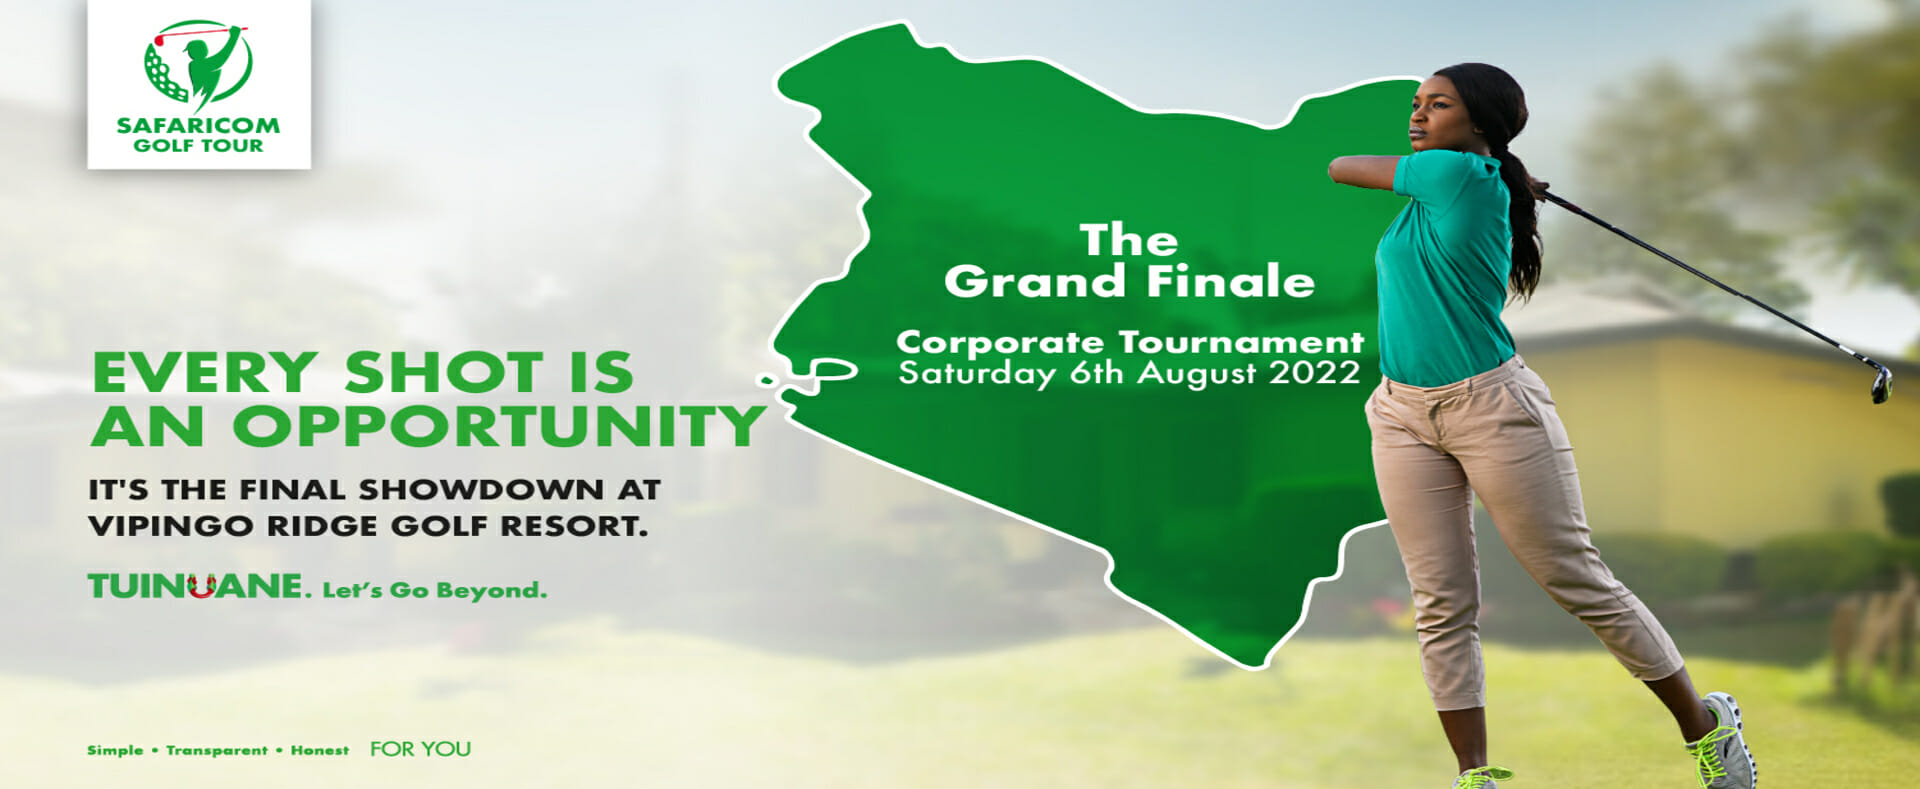 All set for the Safaricom Golf Tour Grand Finale at Vipingo Ridge